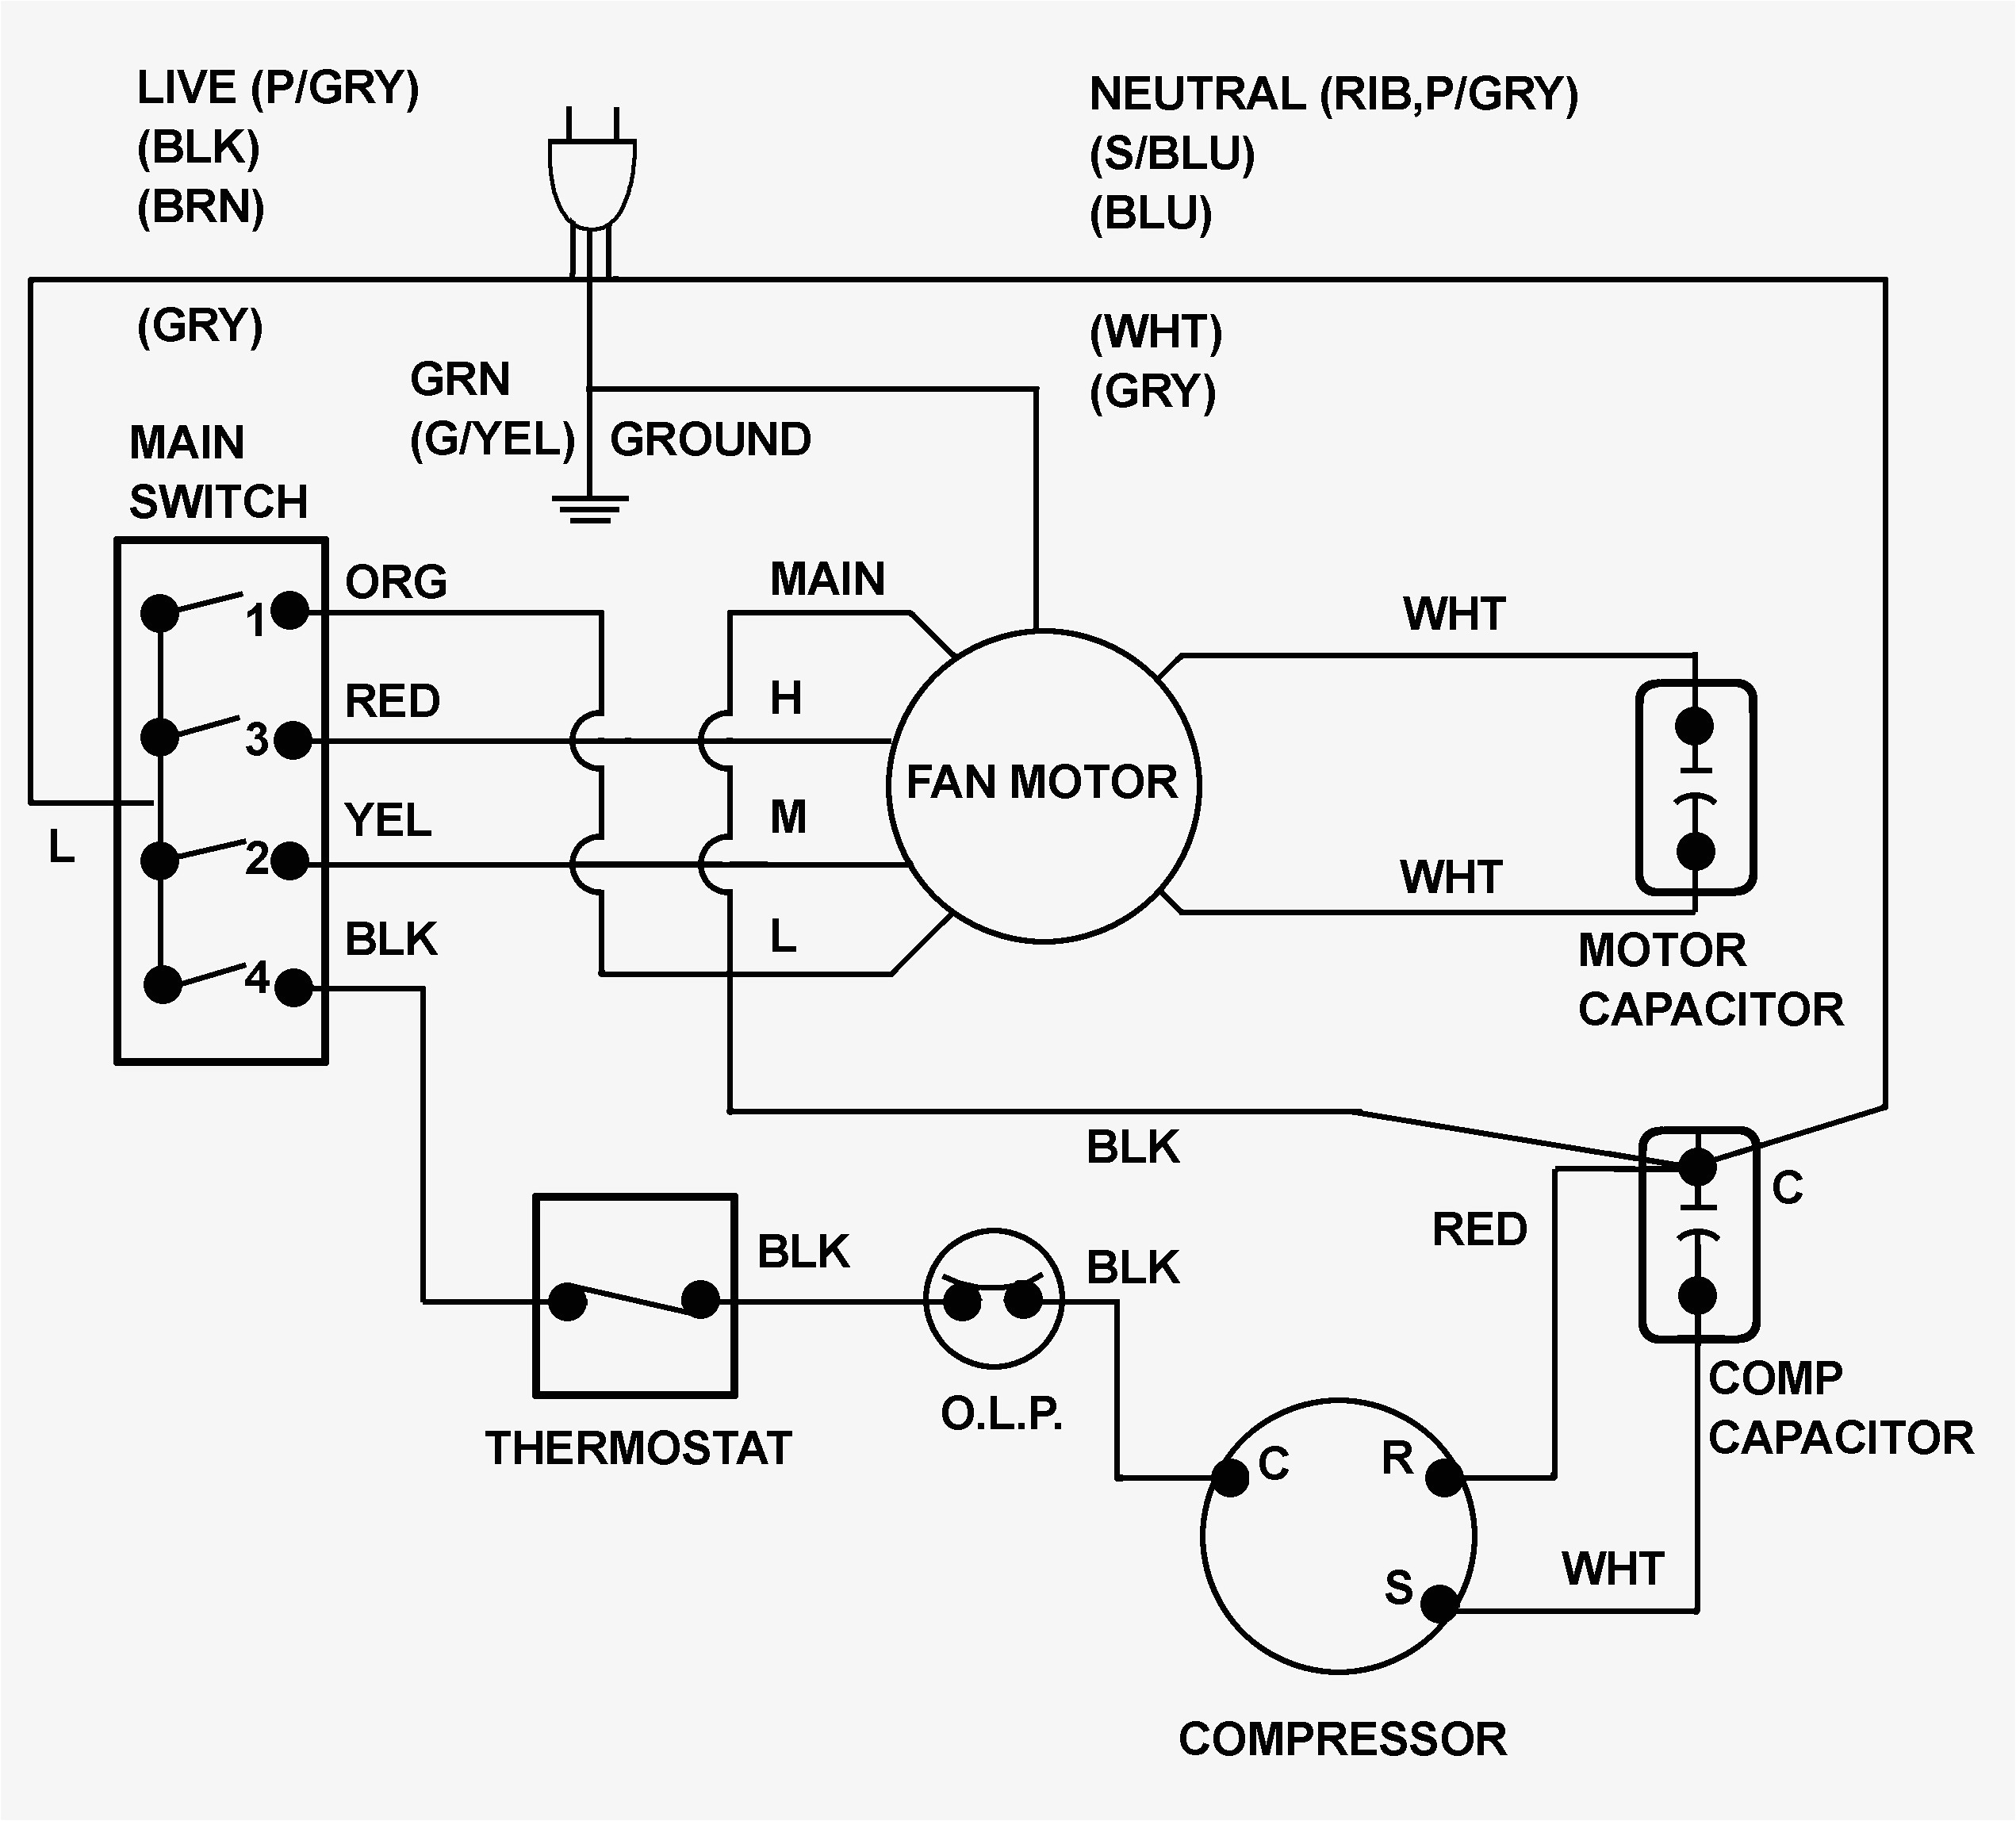 wiring model tempstar diagram nrgf60db04 premium wiring diagram blog schematic tempstar tempstar for wiring heil nulk075dg05